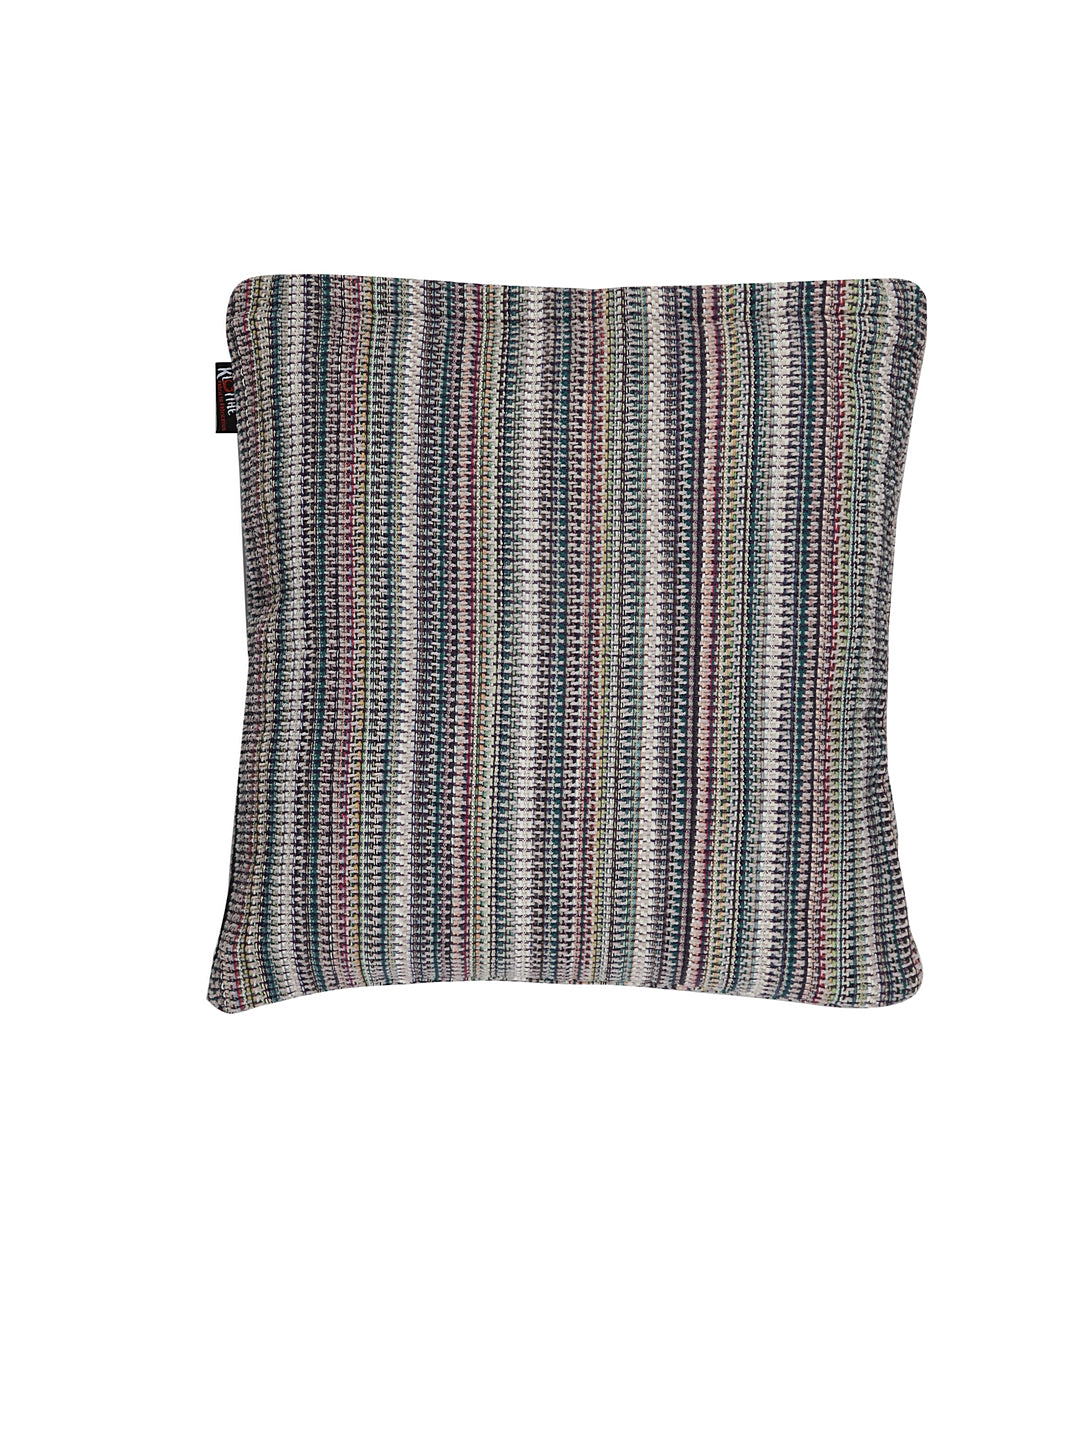 KLOTTHE Set of 5 Multi Cotton Self Design Cushion Covers (40X40 cm)